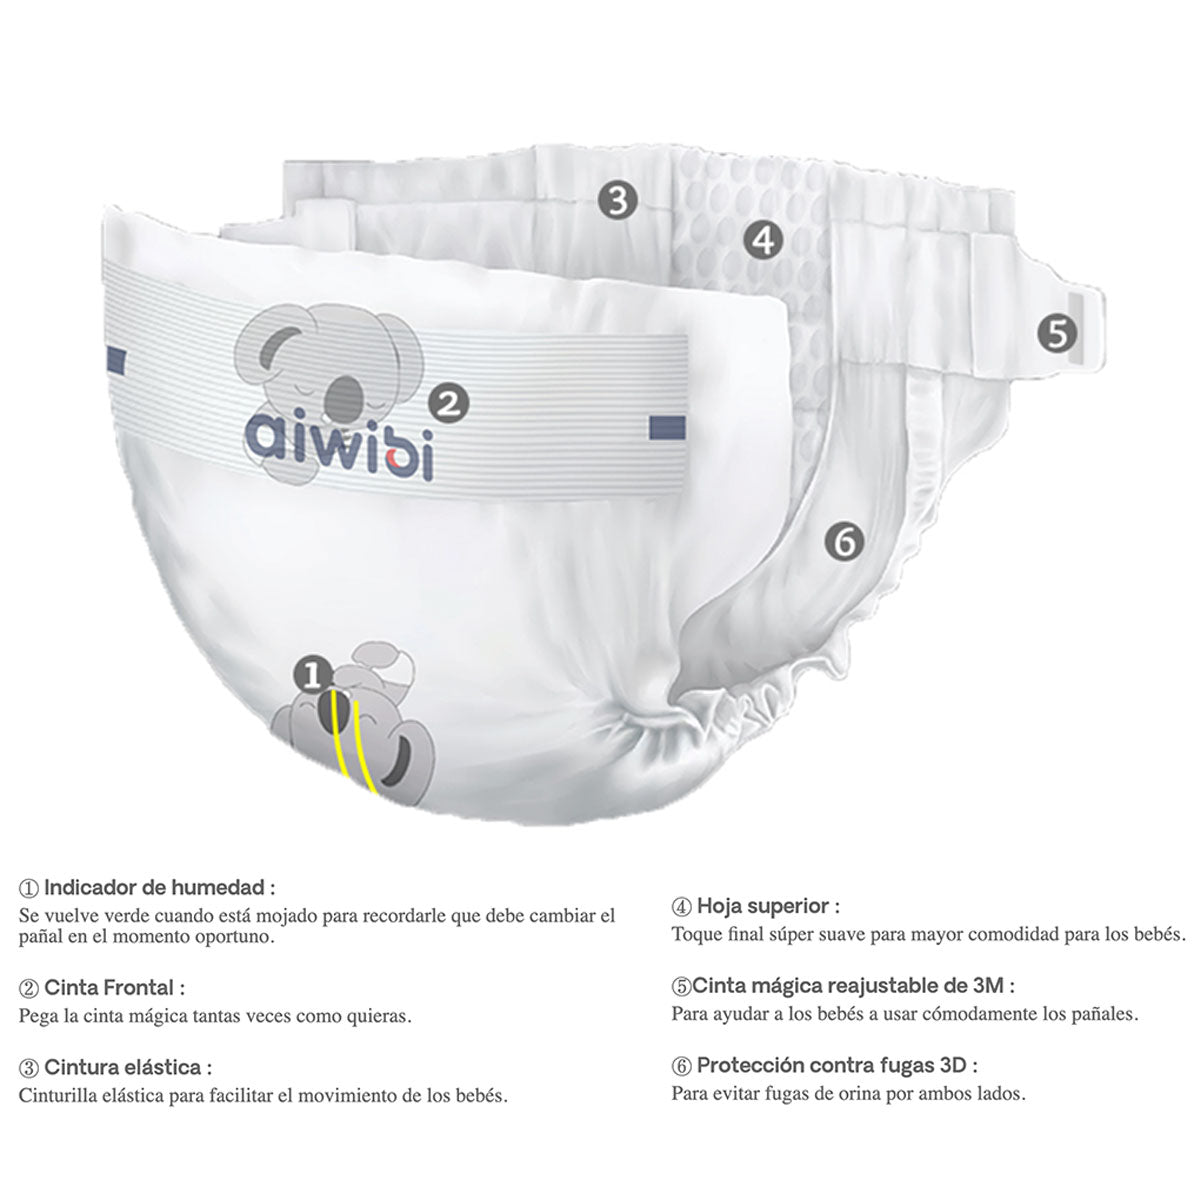 Pañales Aiwibi Premium P (32 unidades) - 🇦🇺 Producto Australiano